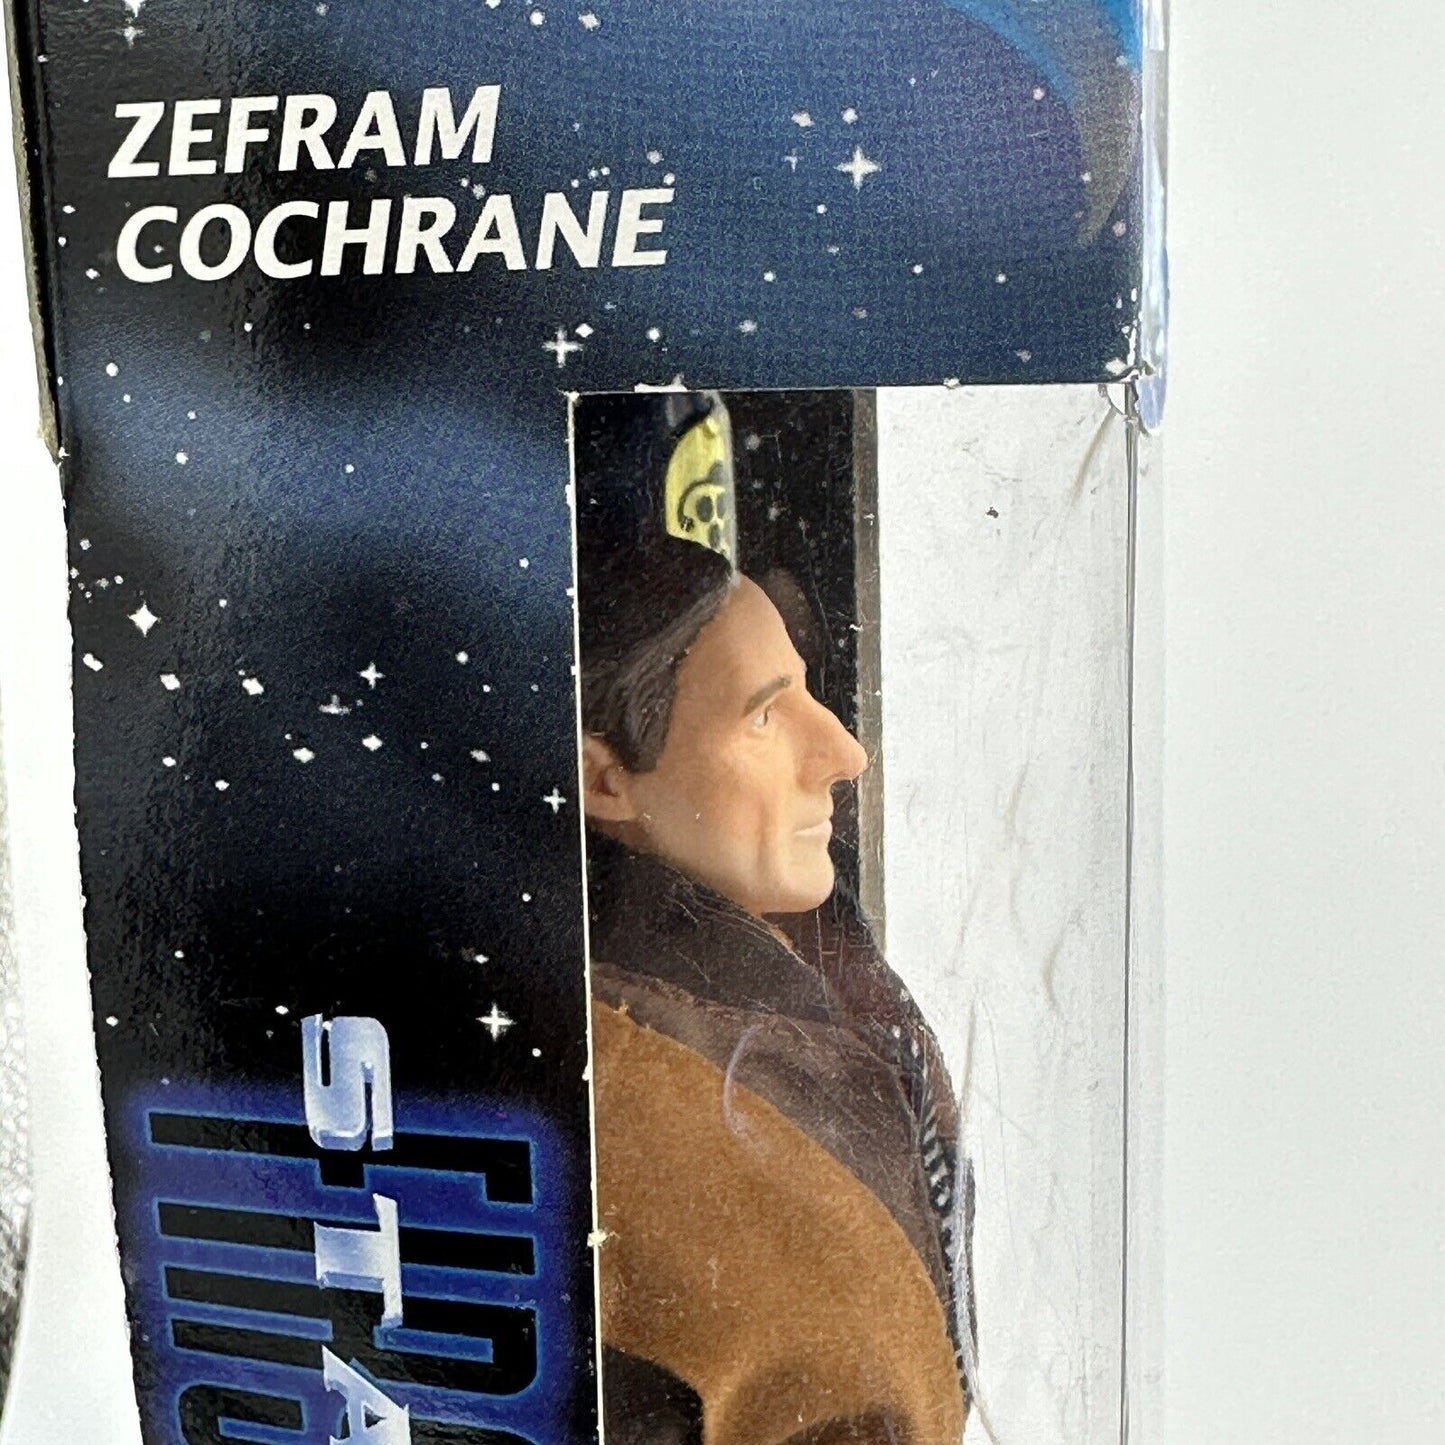 Playmates Zefram Cochrane Figure Star Trek First Contact 9in 1996 Collector Box